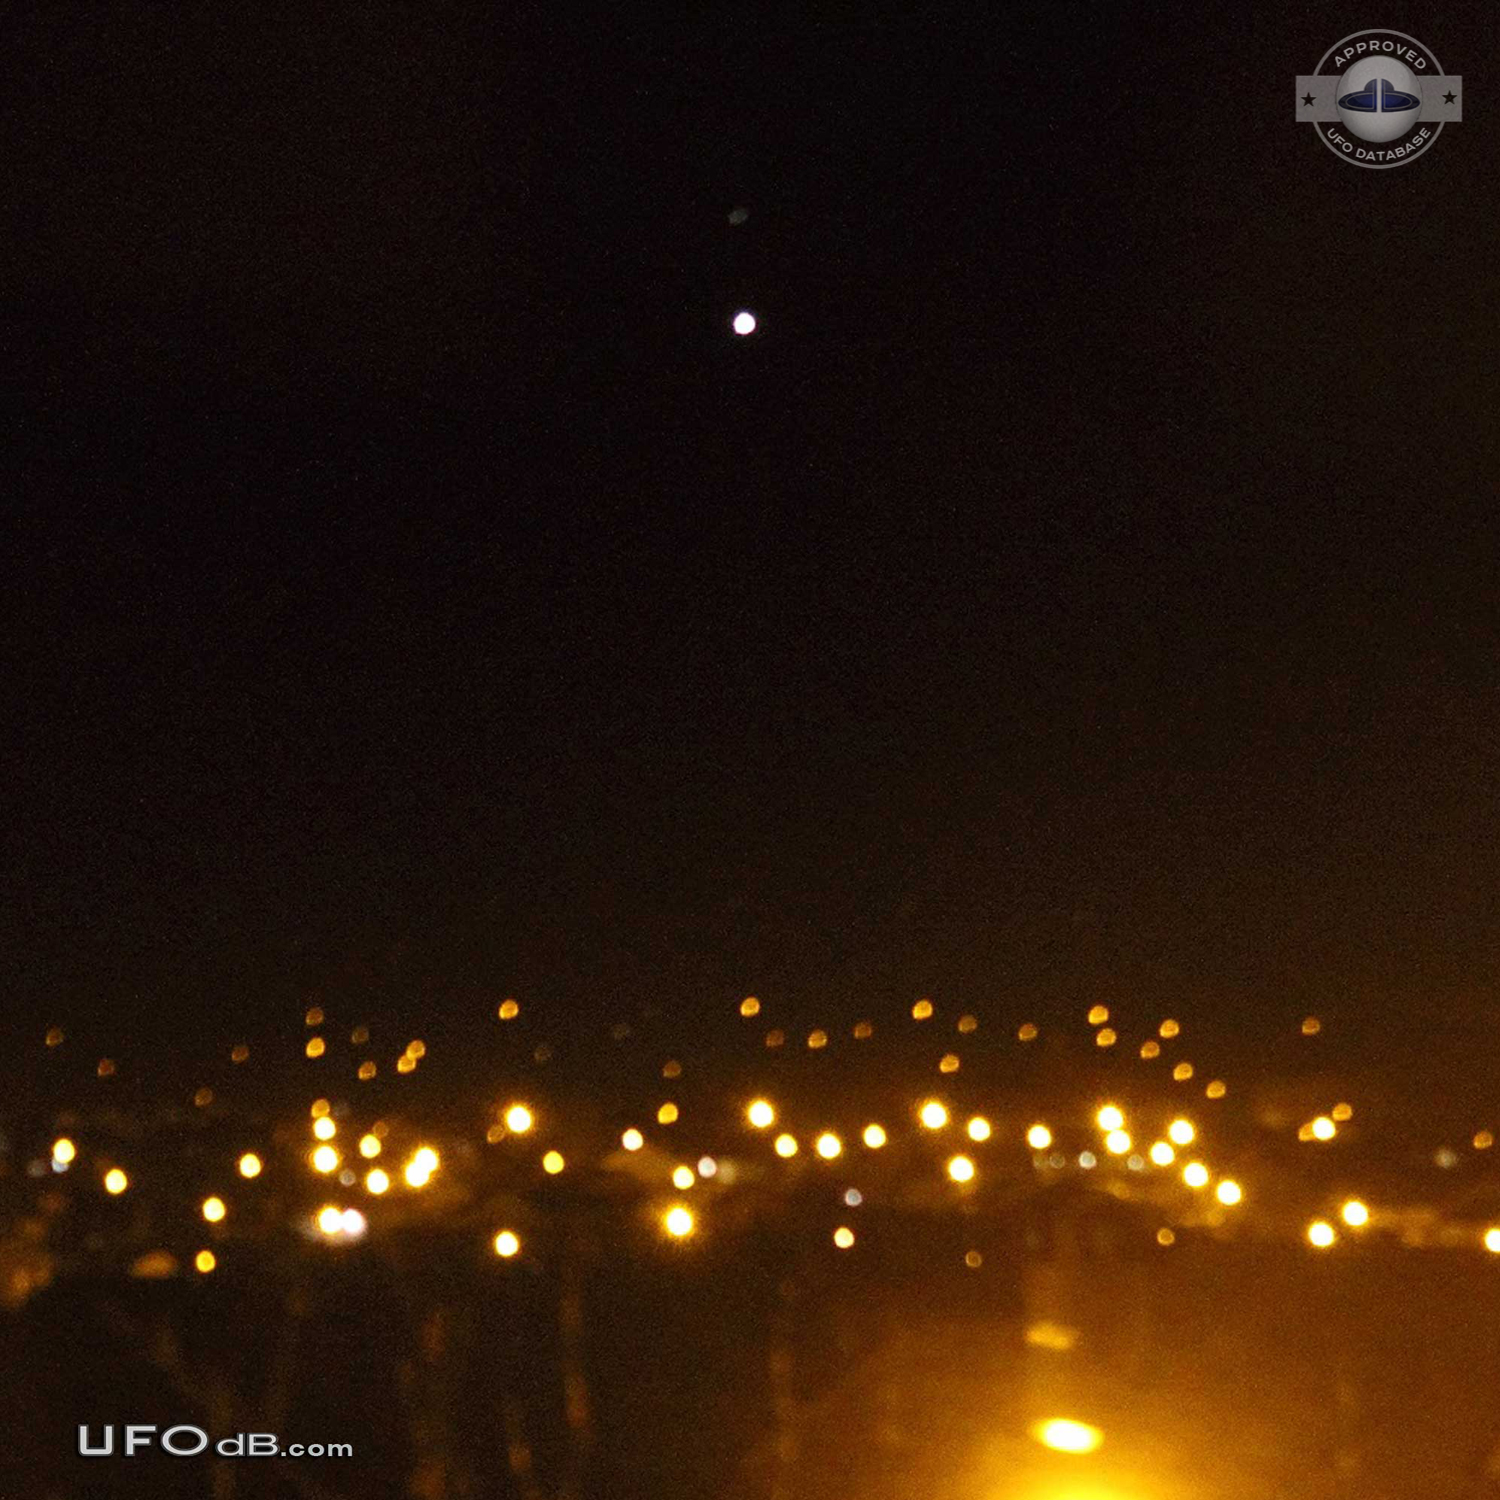 Clear White Orb UFO picture - Ellon Aberdeenshire Scotland UK - 2012 UFO Picture #416-1